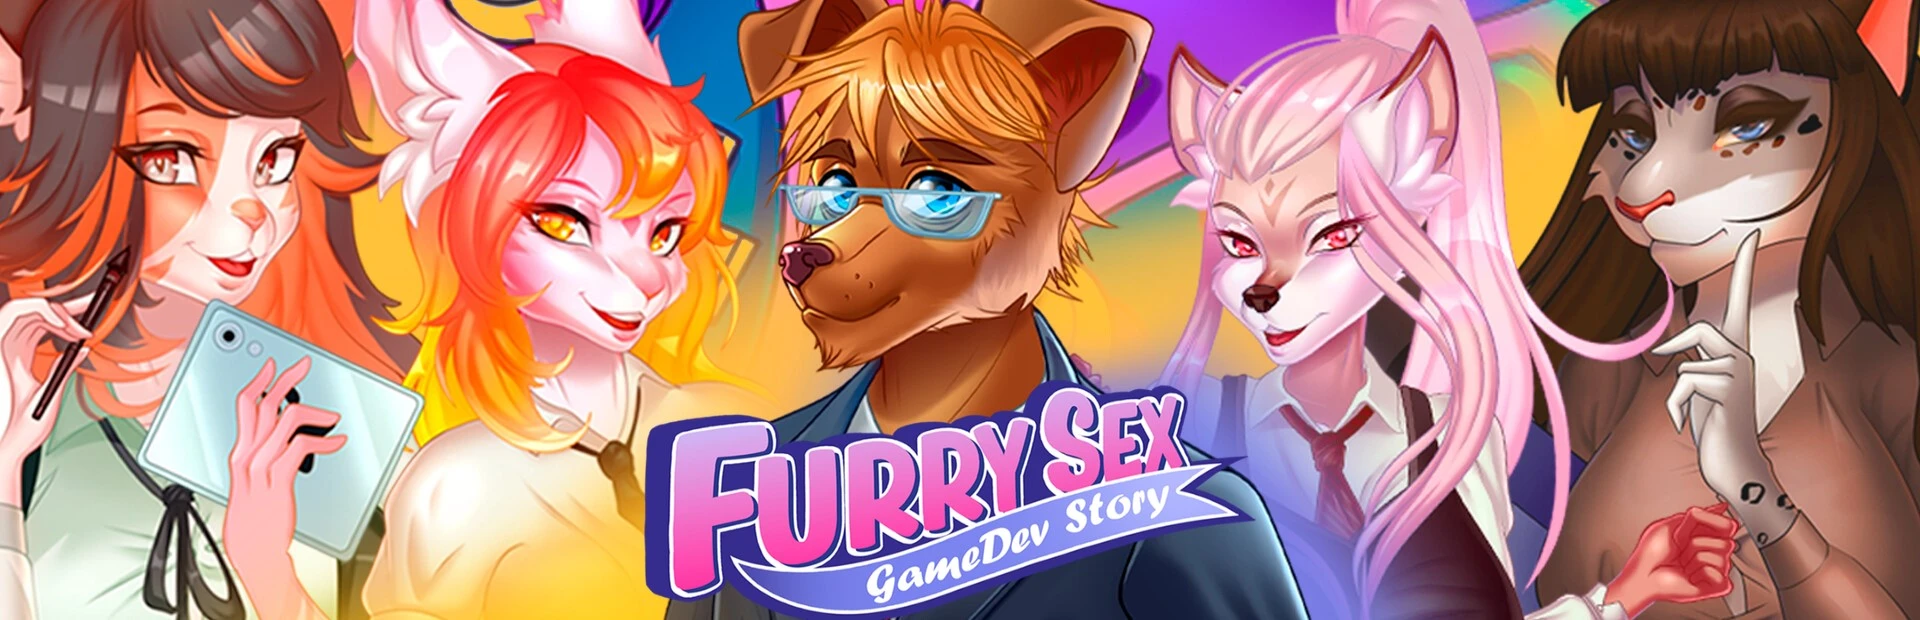 Furry Sex - GameDev Story main image